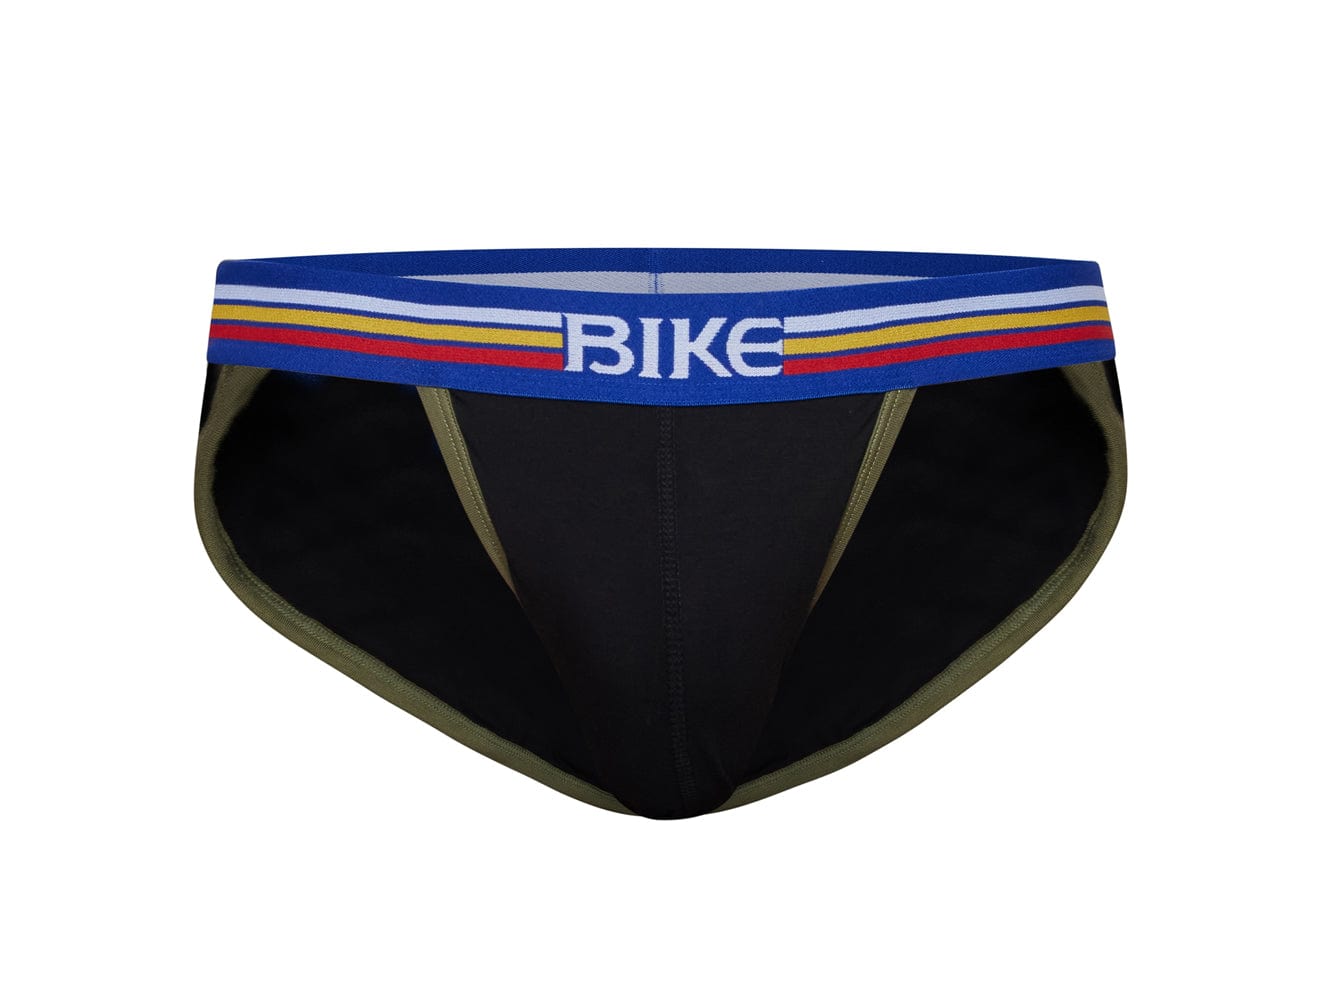 Black Bike Athletic underwear jock briefs